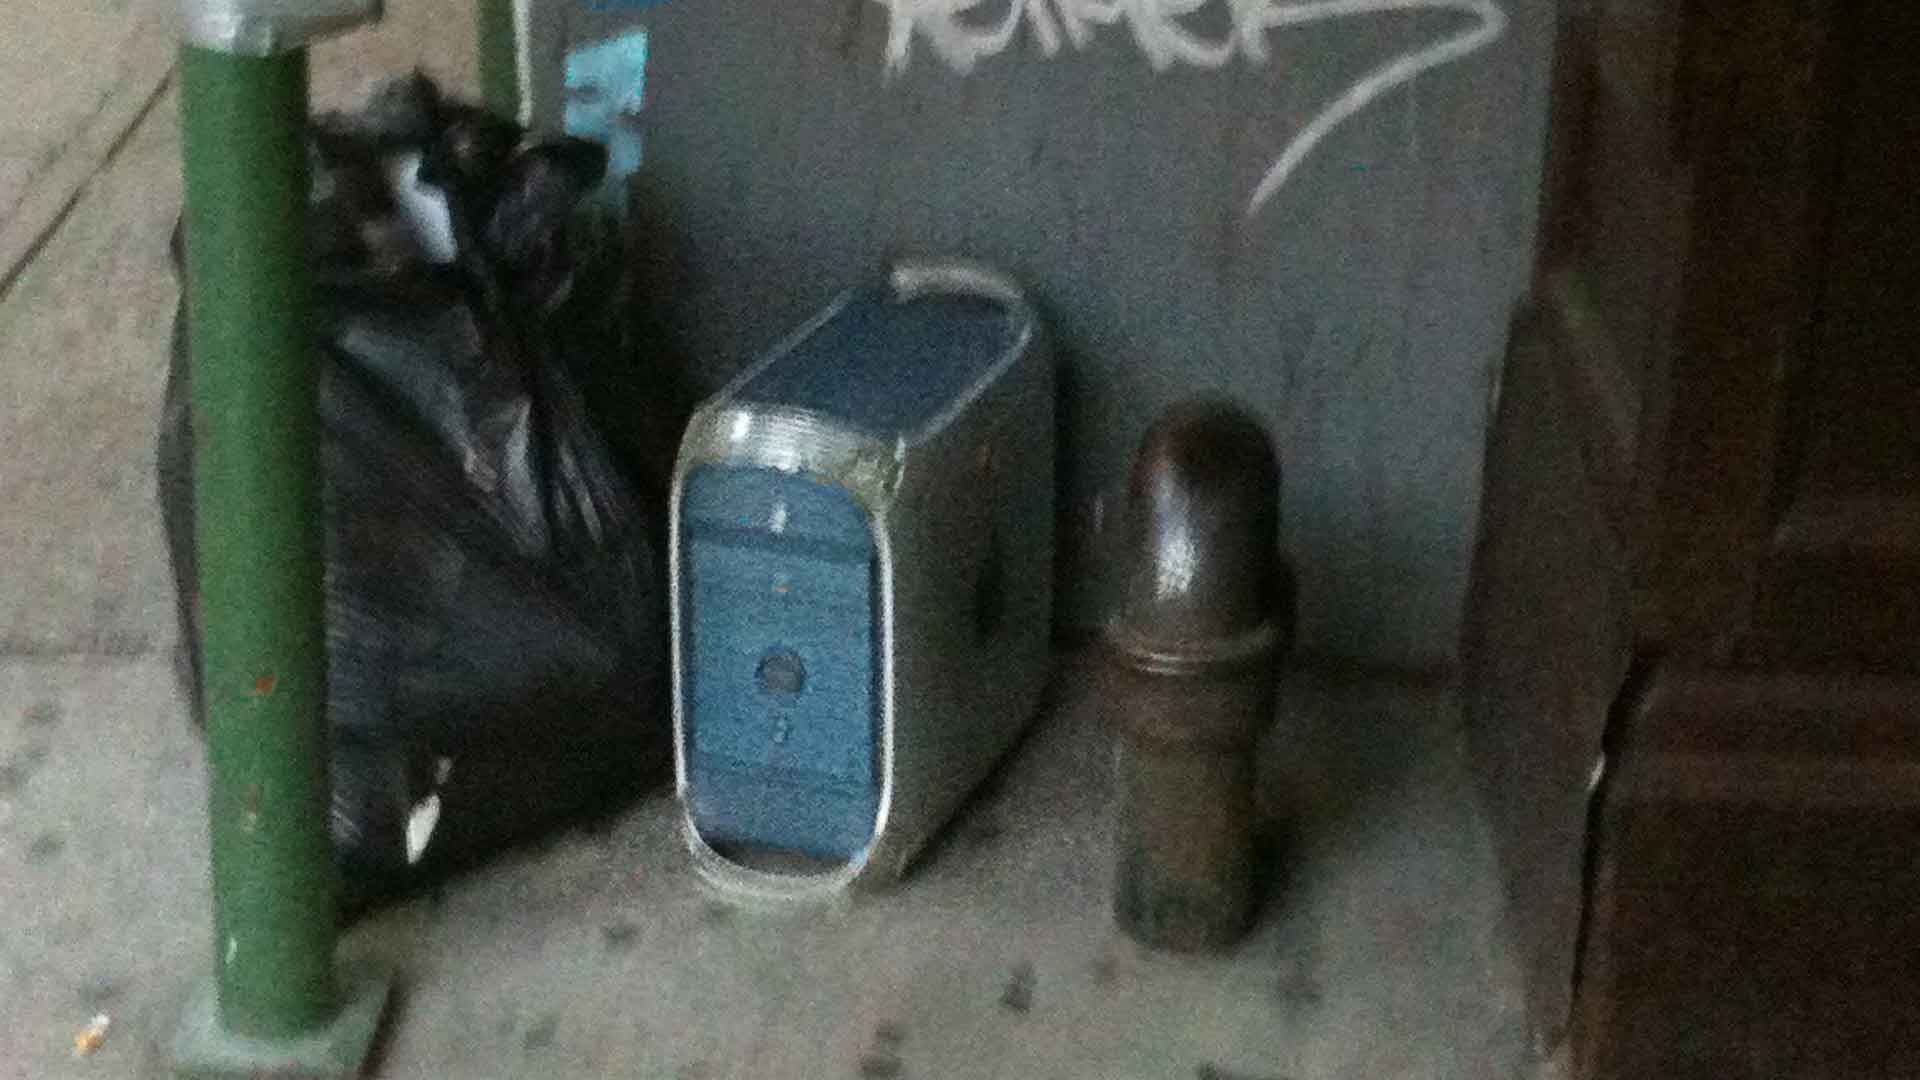 Power Mac G4 Discarded in Trash On New York City Street